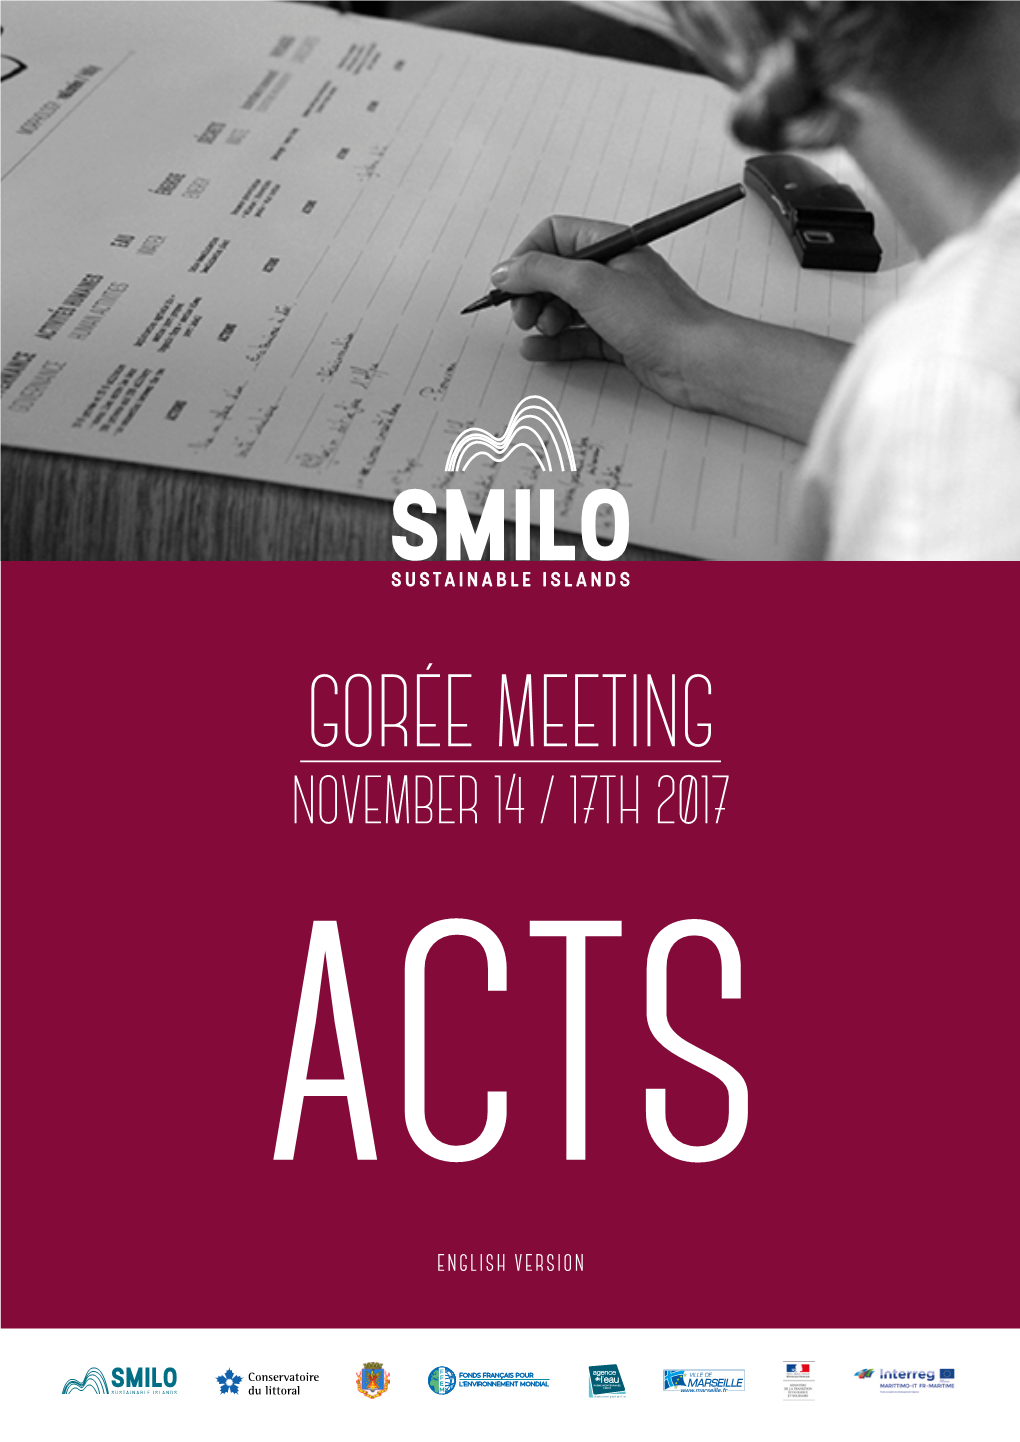 Gorée Meeting November 14 / 17Th 2017